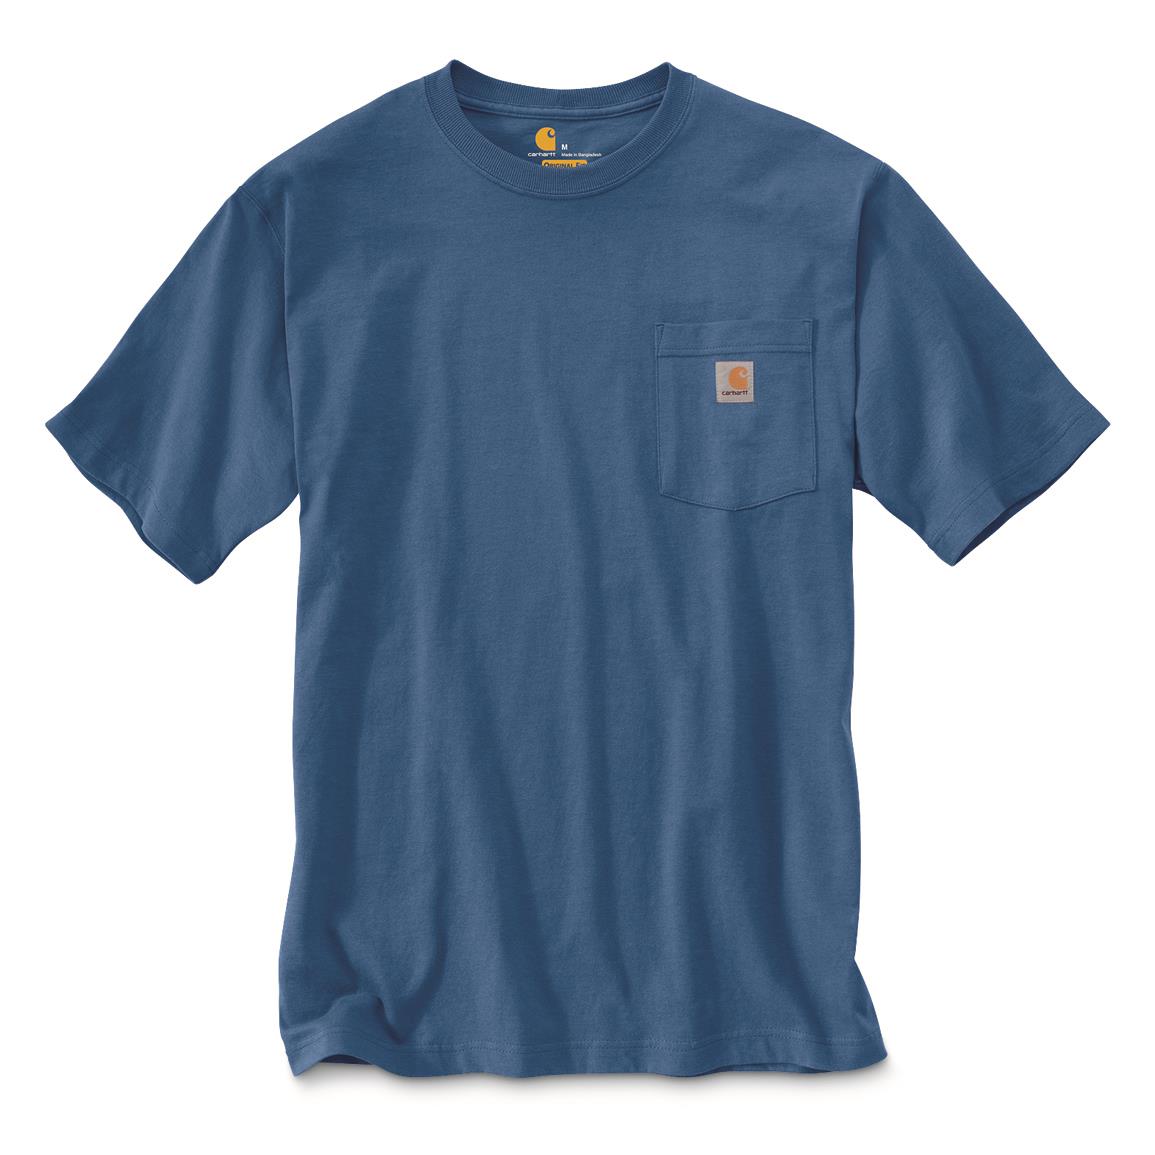 Download Carhartt Men's Dog Graphic Tee Shirt - 703553, T-Shirts at ...